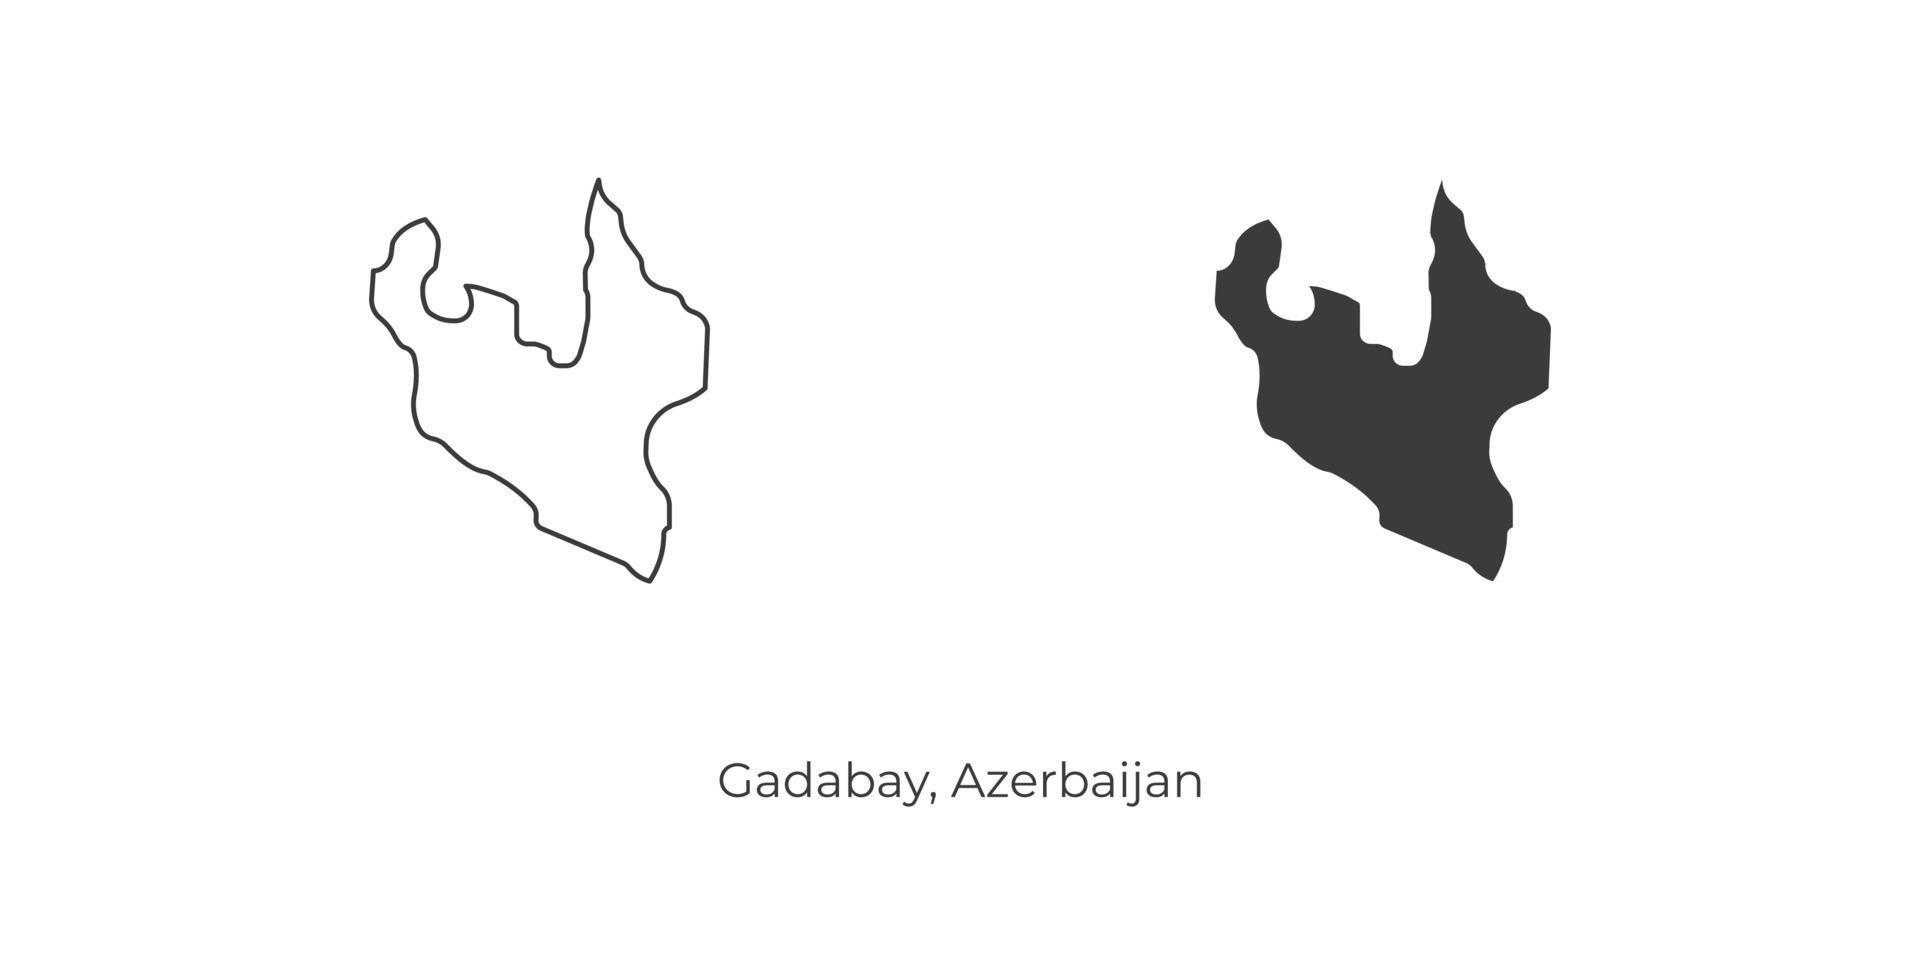 enkel vektorillustration av gadabay-kartan, Azerbajdzjan. vektor